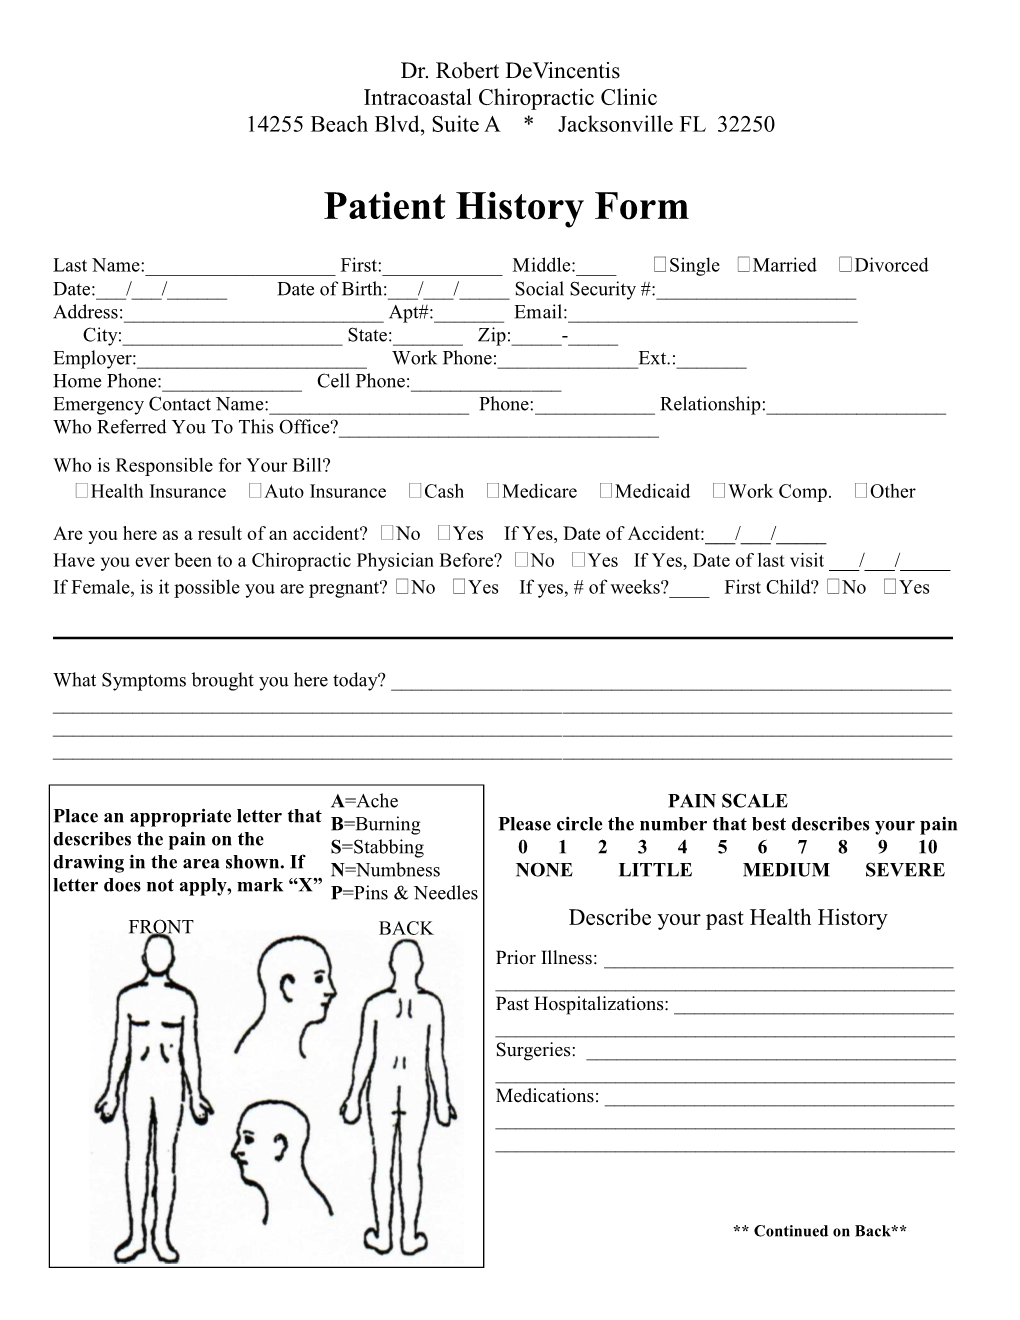 Patient History Form